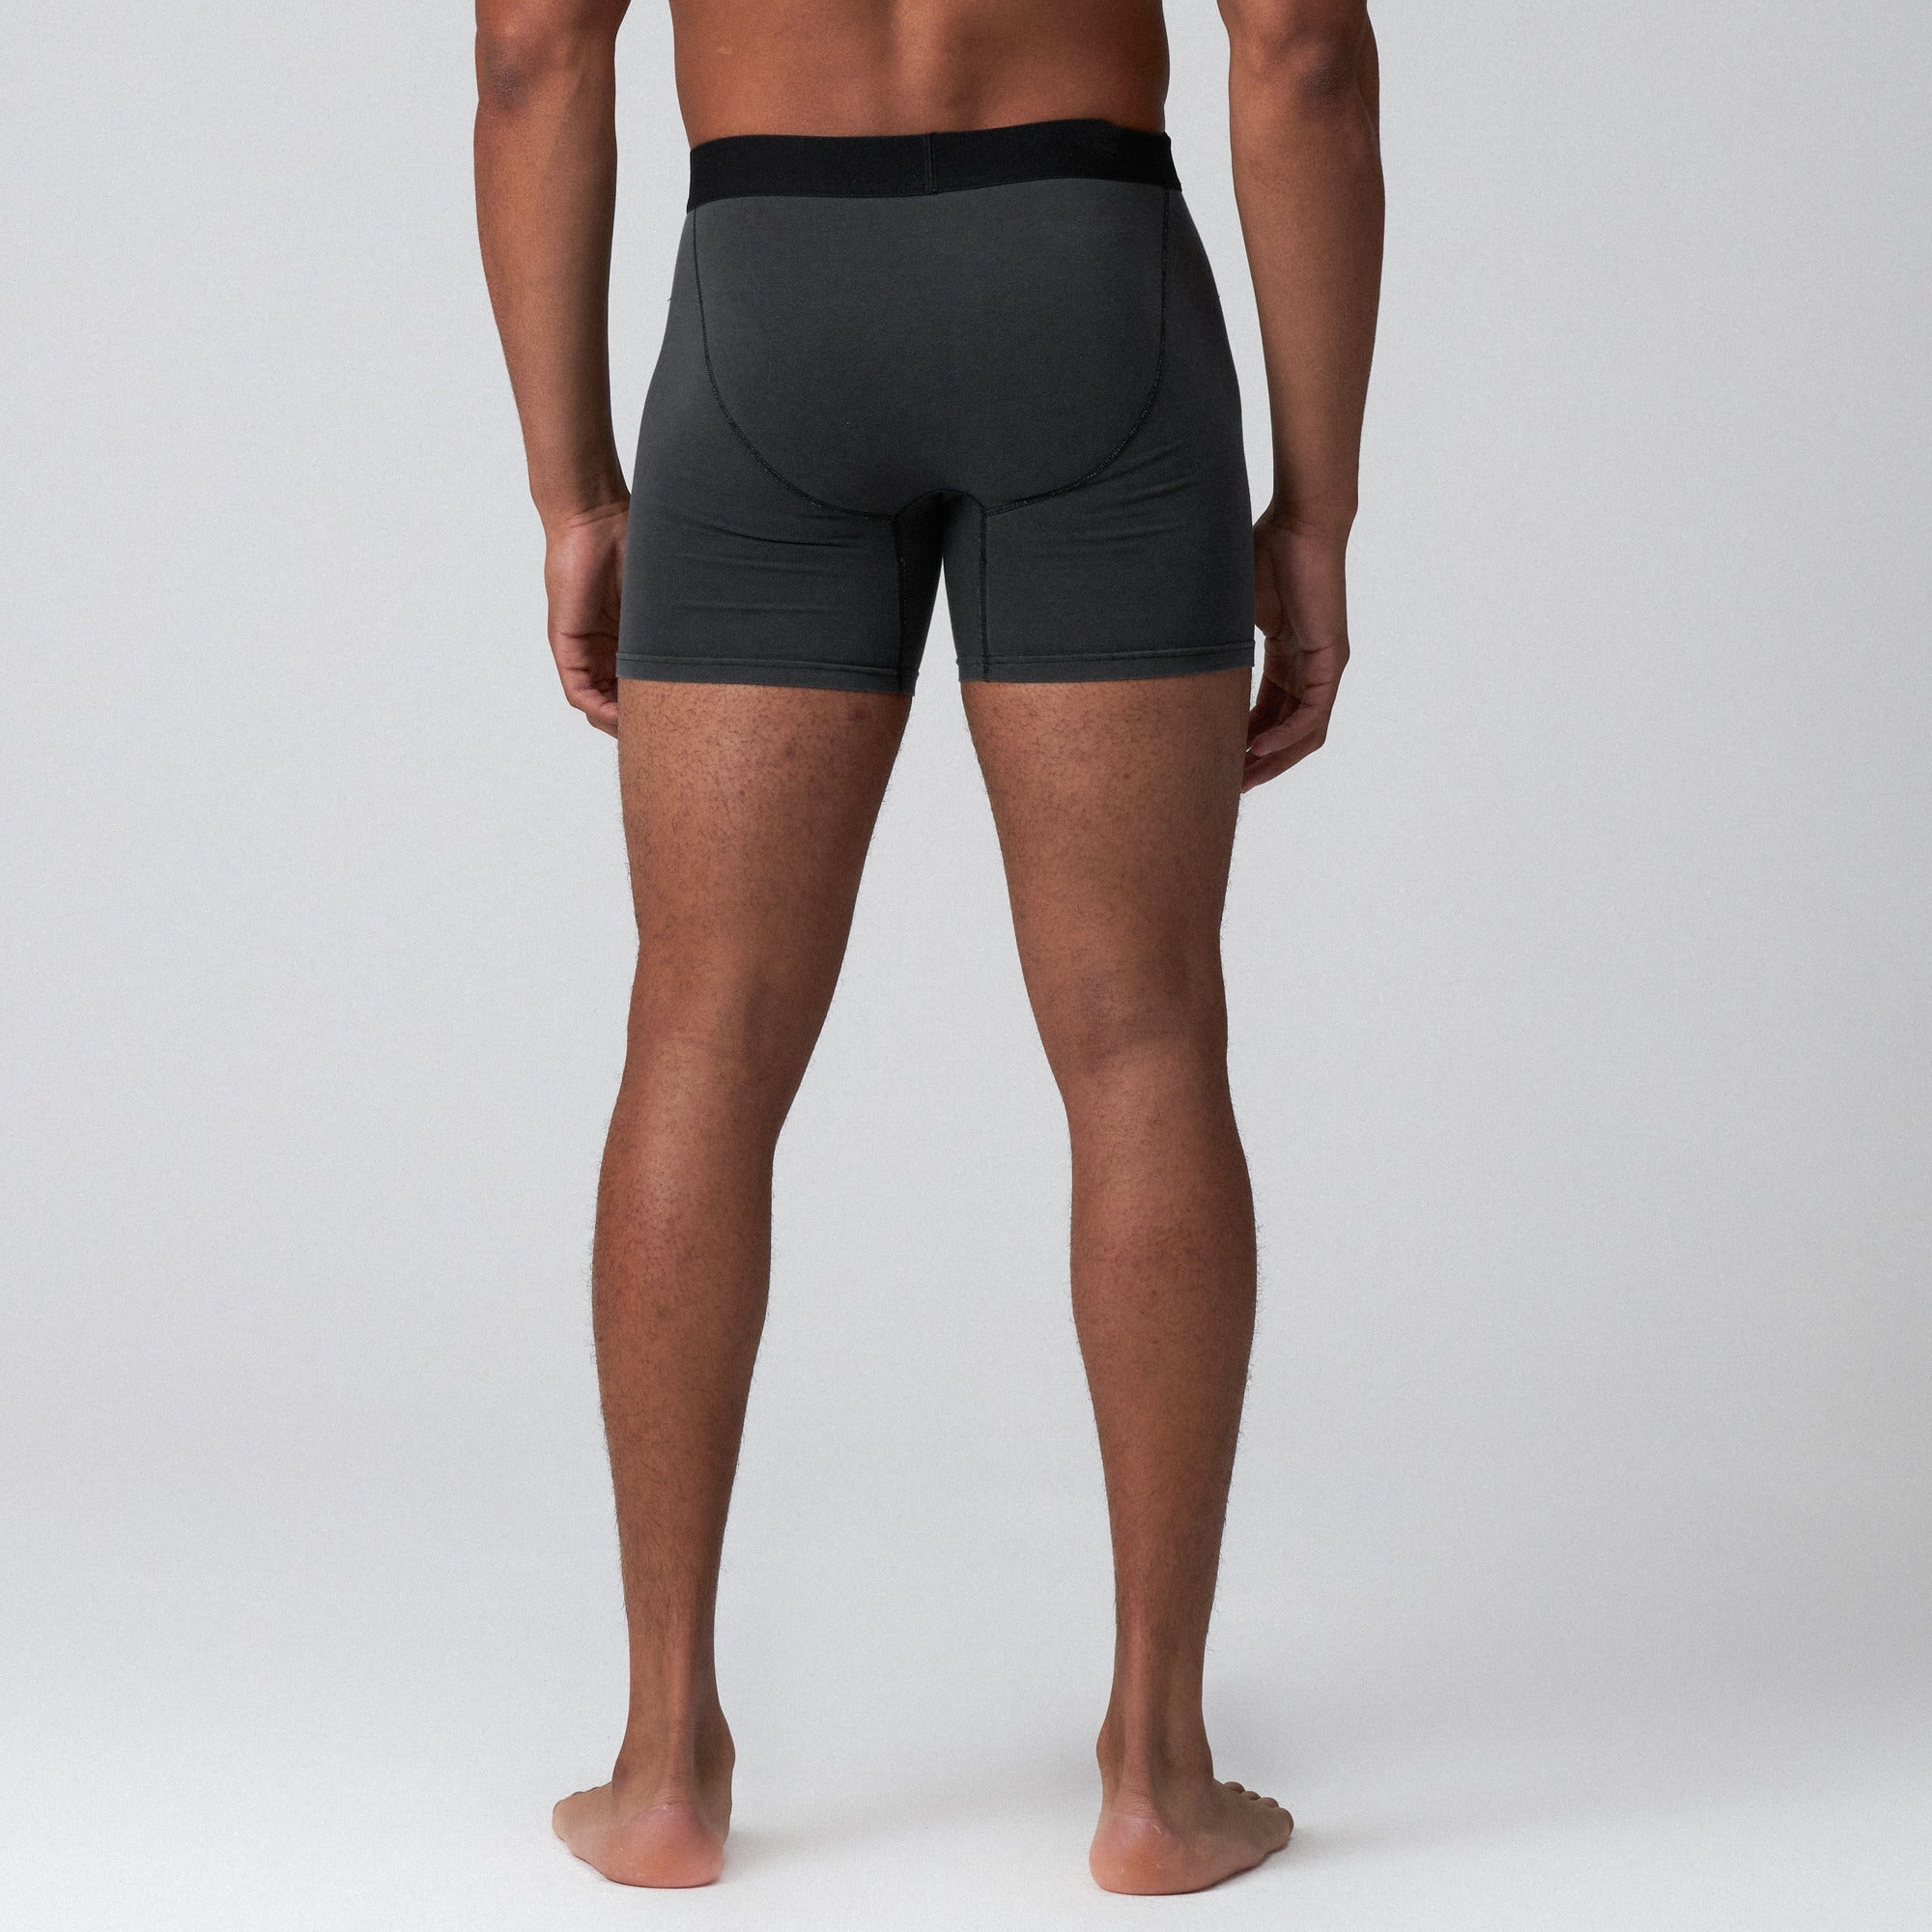 Men's Boxer Brief, Premium underwear